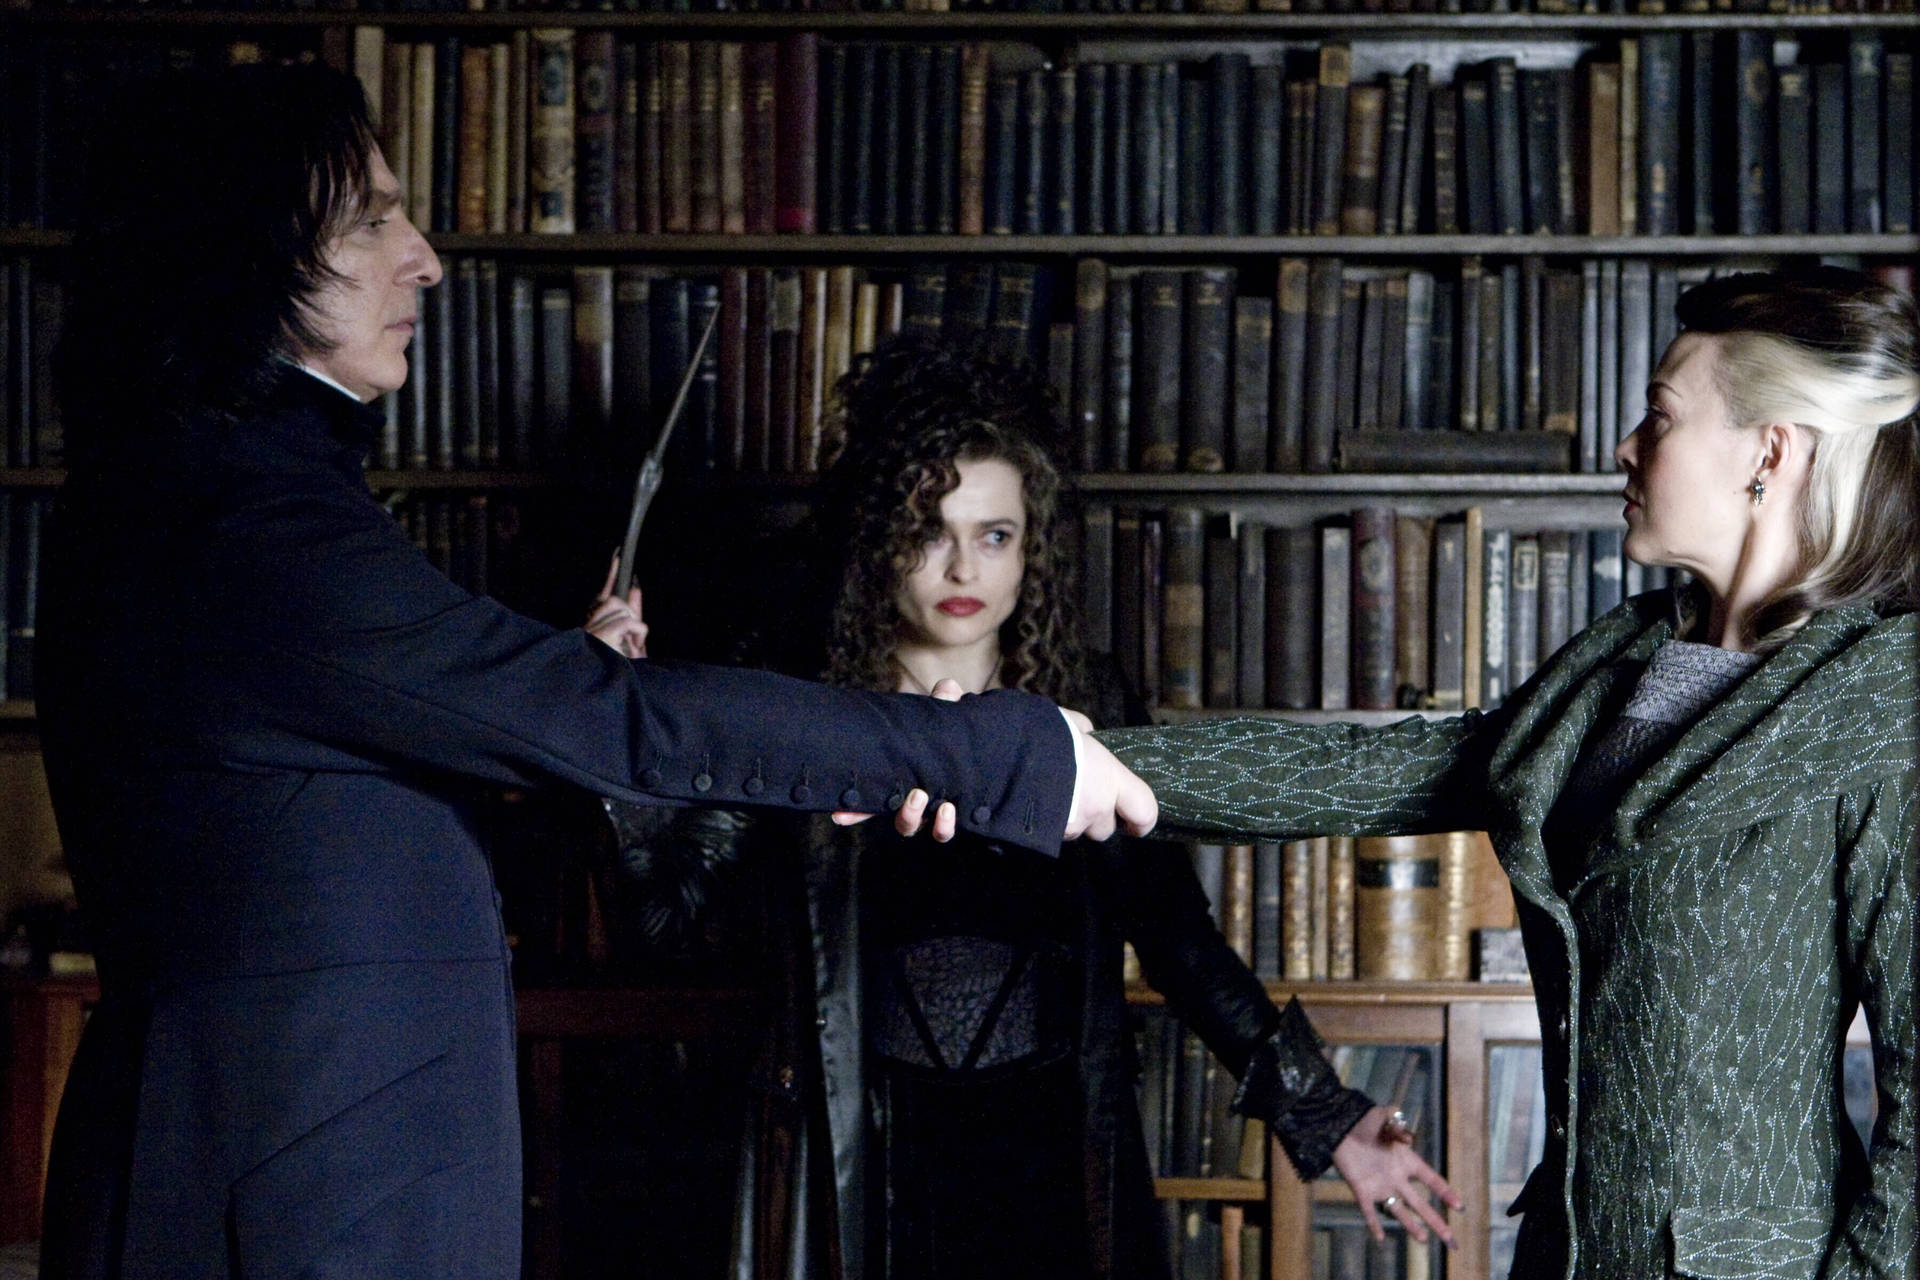 Bellatrix Lestrange Against Book Shelf